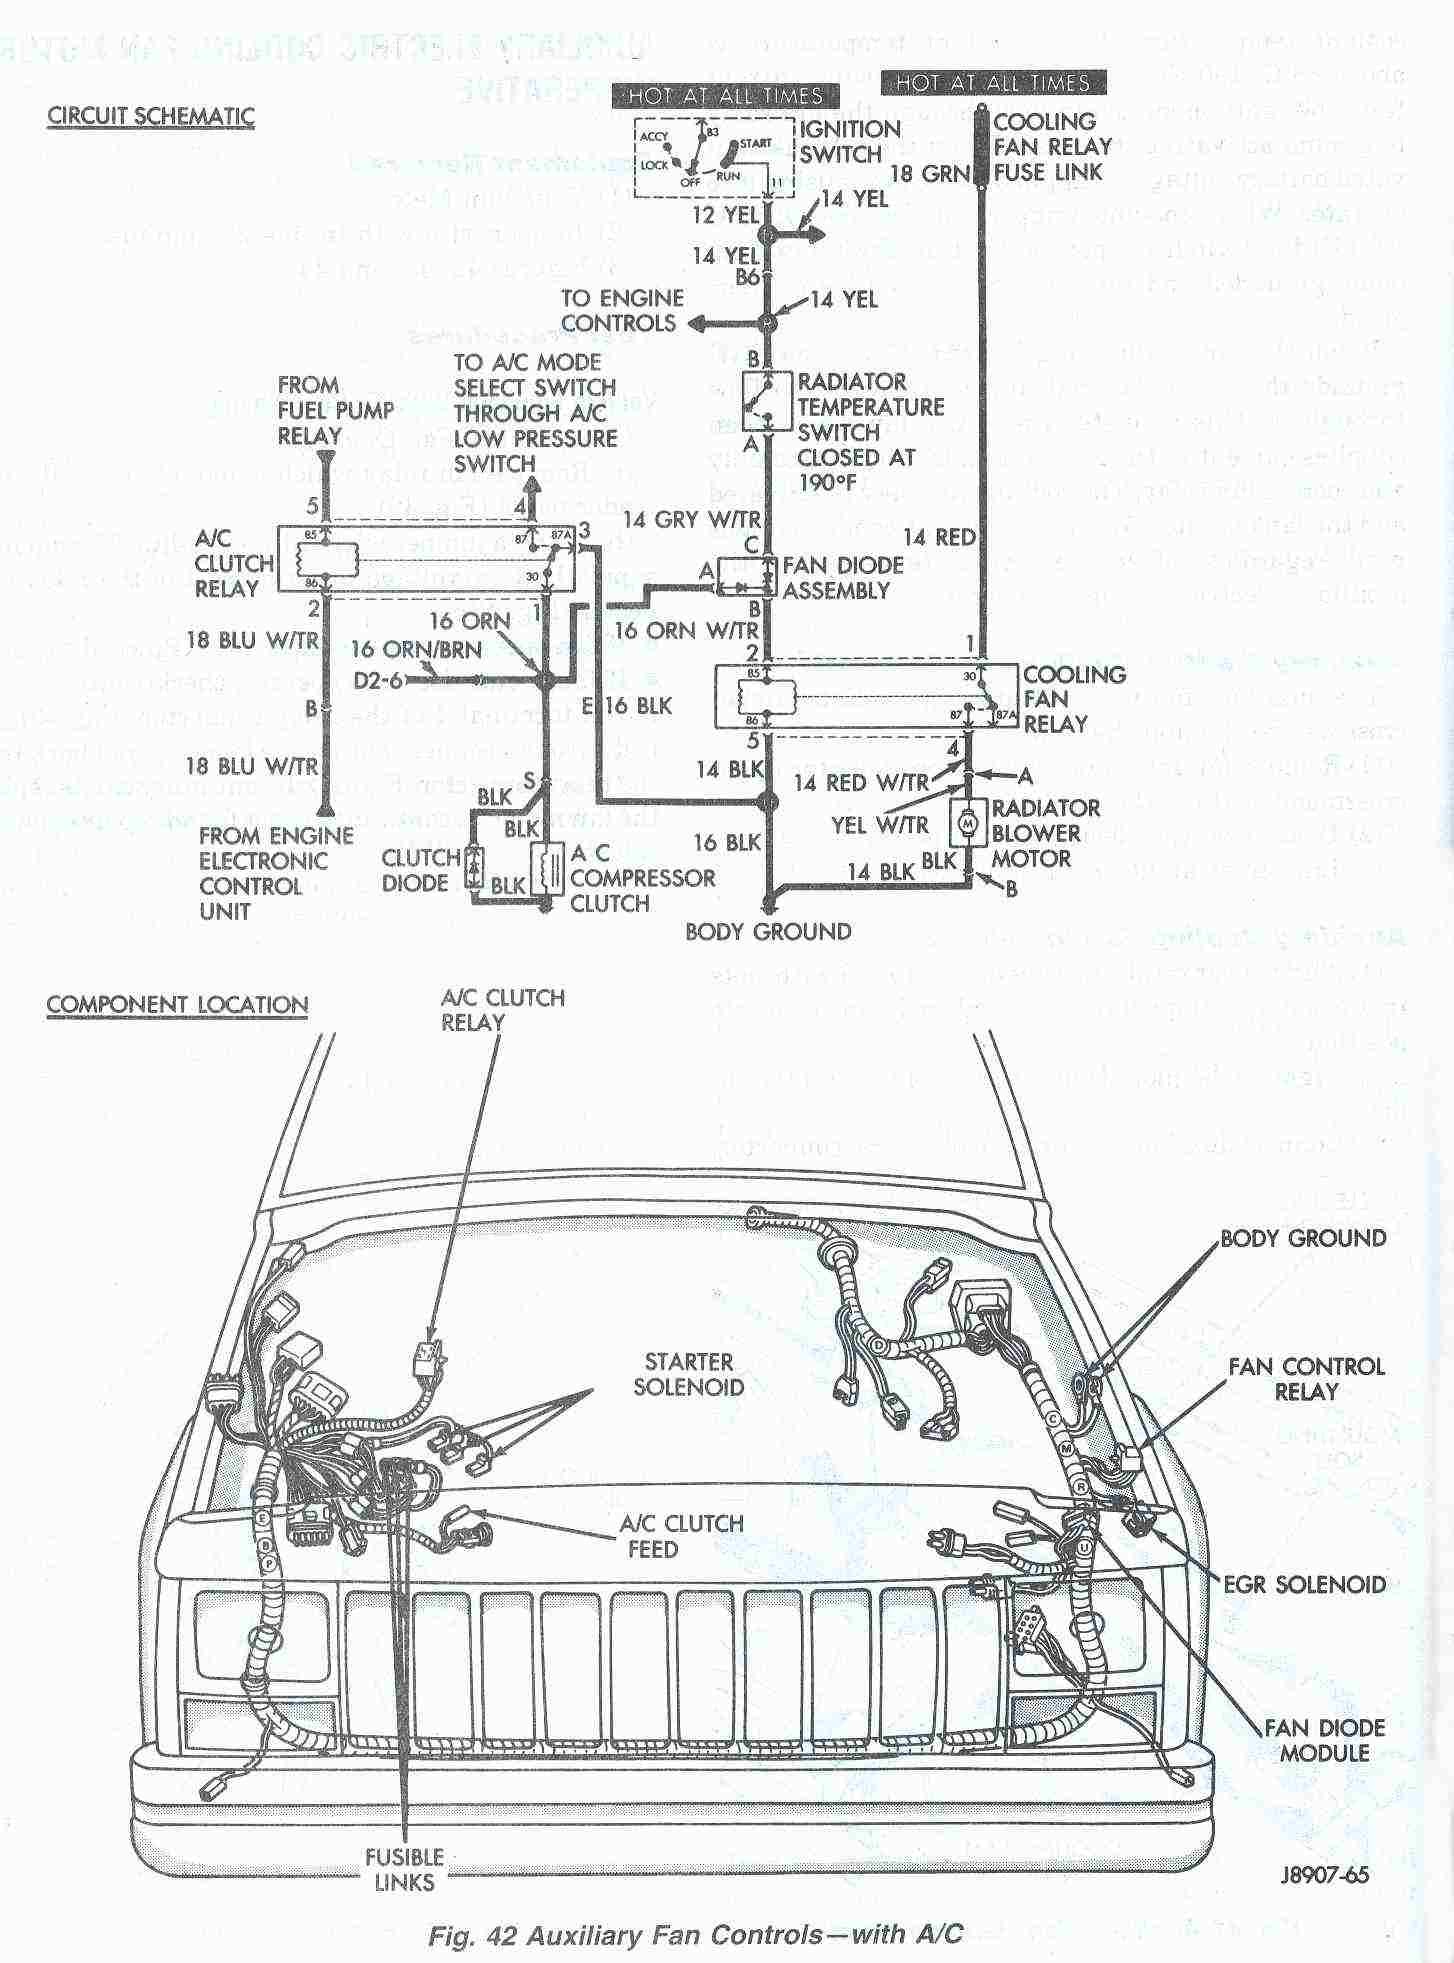 2003 Jeep Cherokee 4.7 Hydraulic Fan Wiring Diagram 903b1a2 2002 Jeep Fan Control Wiring Of 2003 Jeep Cherokee 4.7 Hydraulic Fan Wiring Diagram